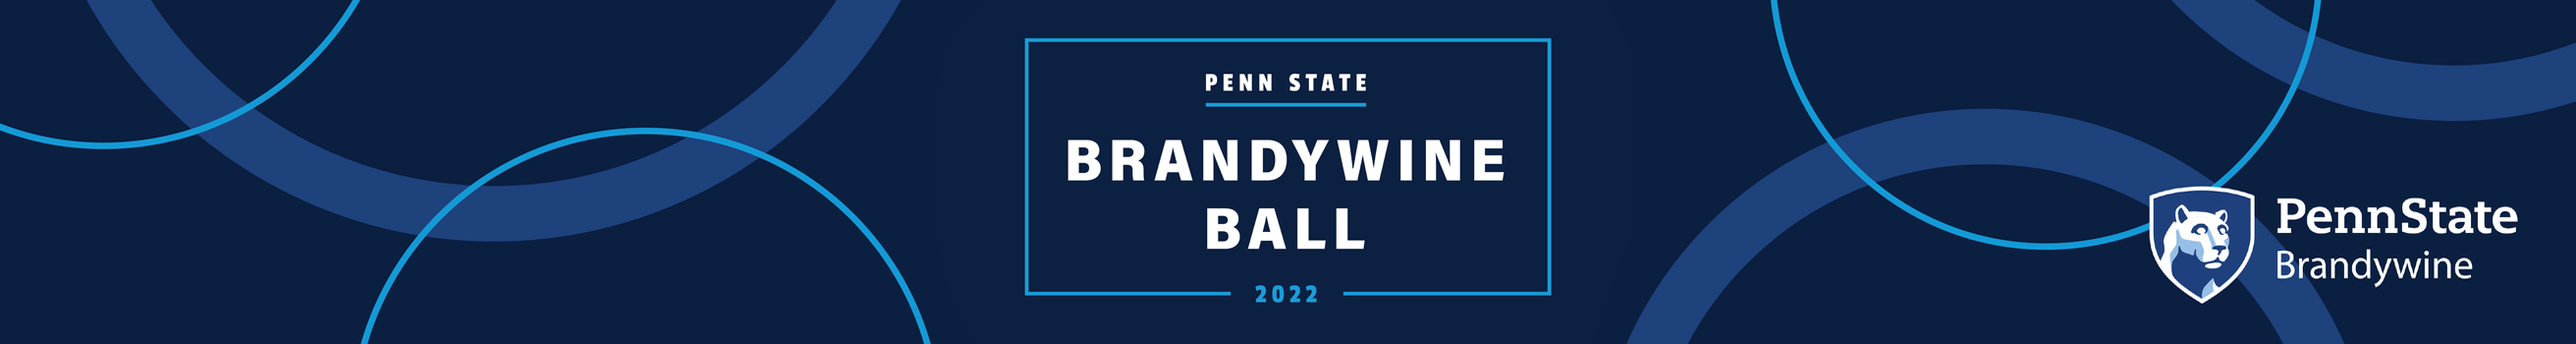 Penn State Brandywine Ball